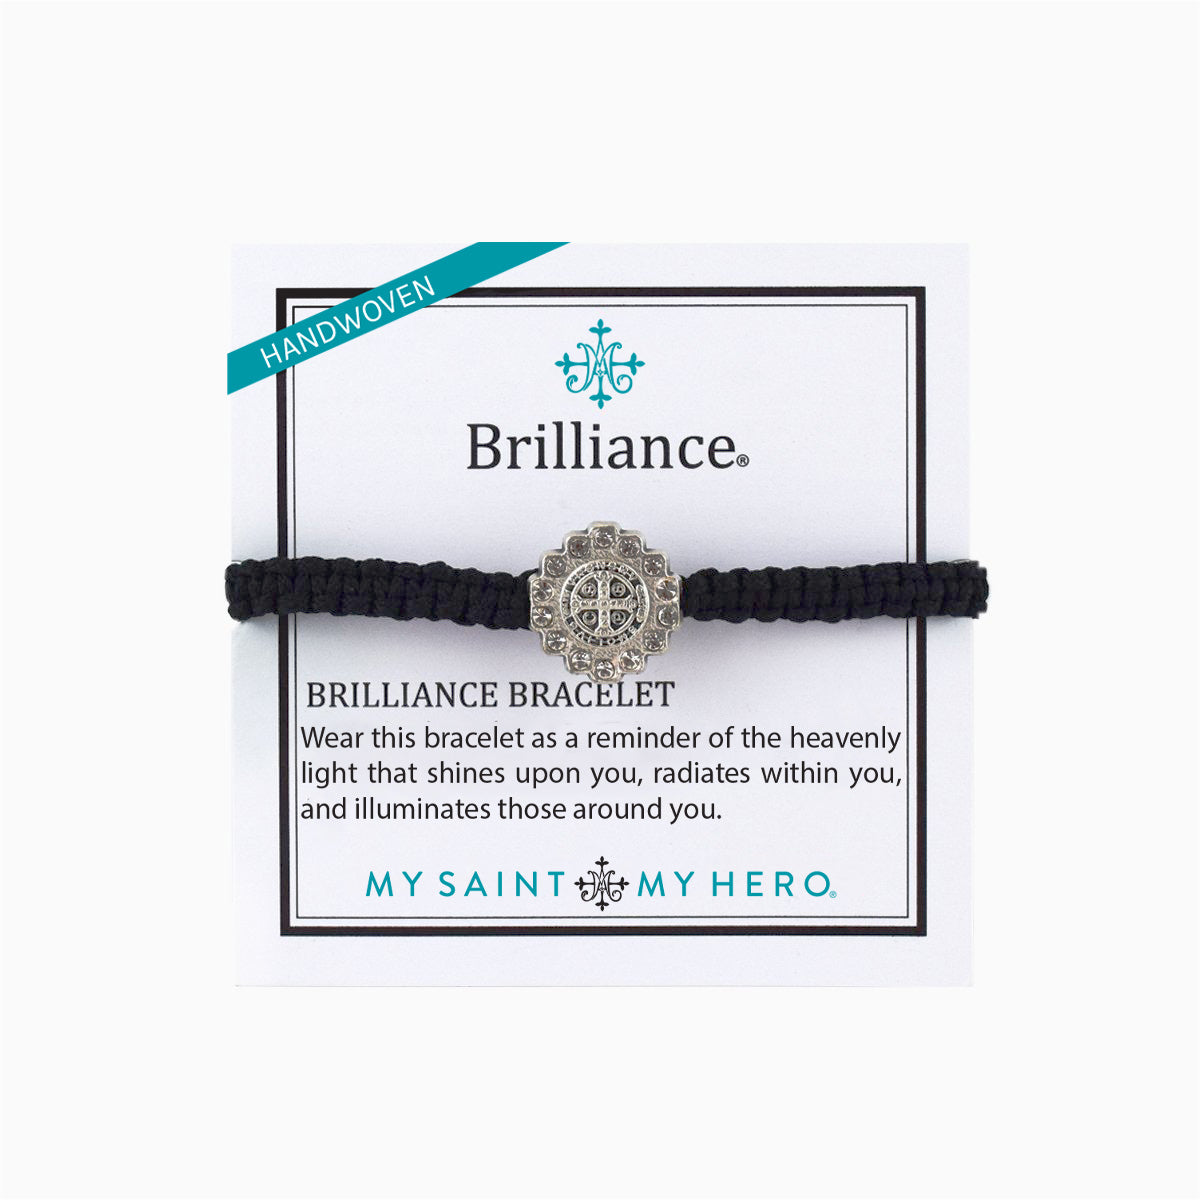 Brilliance Bracelet by My Saint My Hero